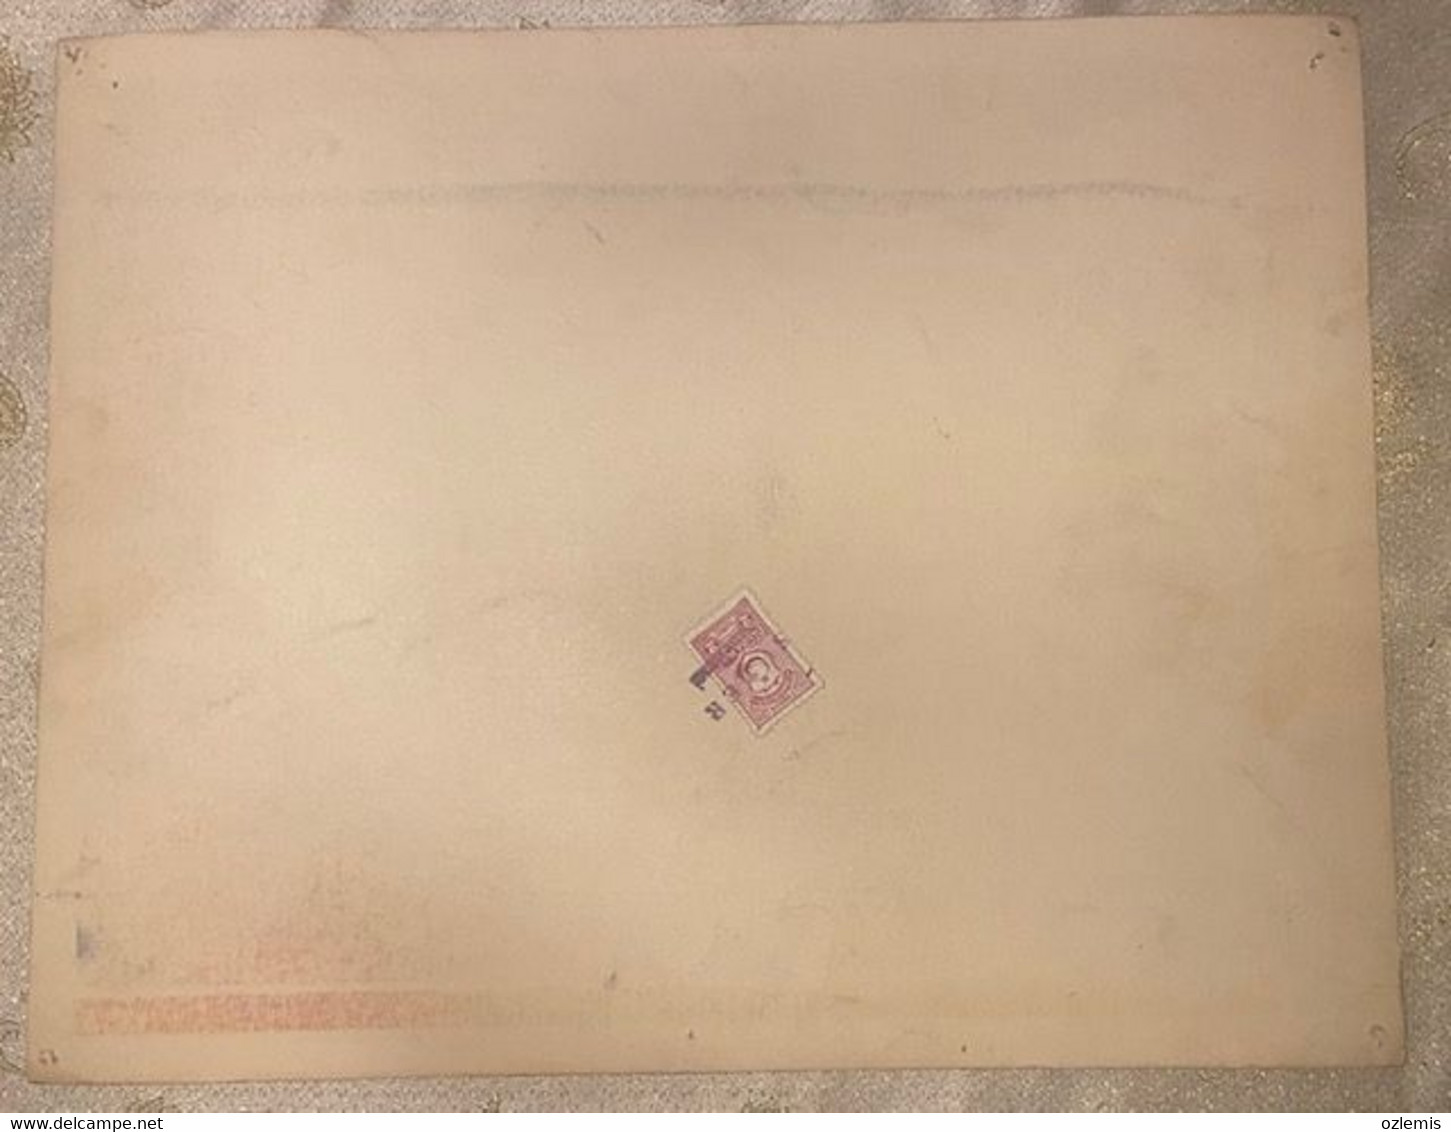 ELLA RAINES ROD CAMERON ,THE RUNAROUND ,LOBBY CARD - Handtekening